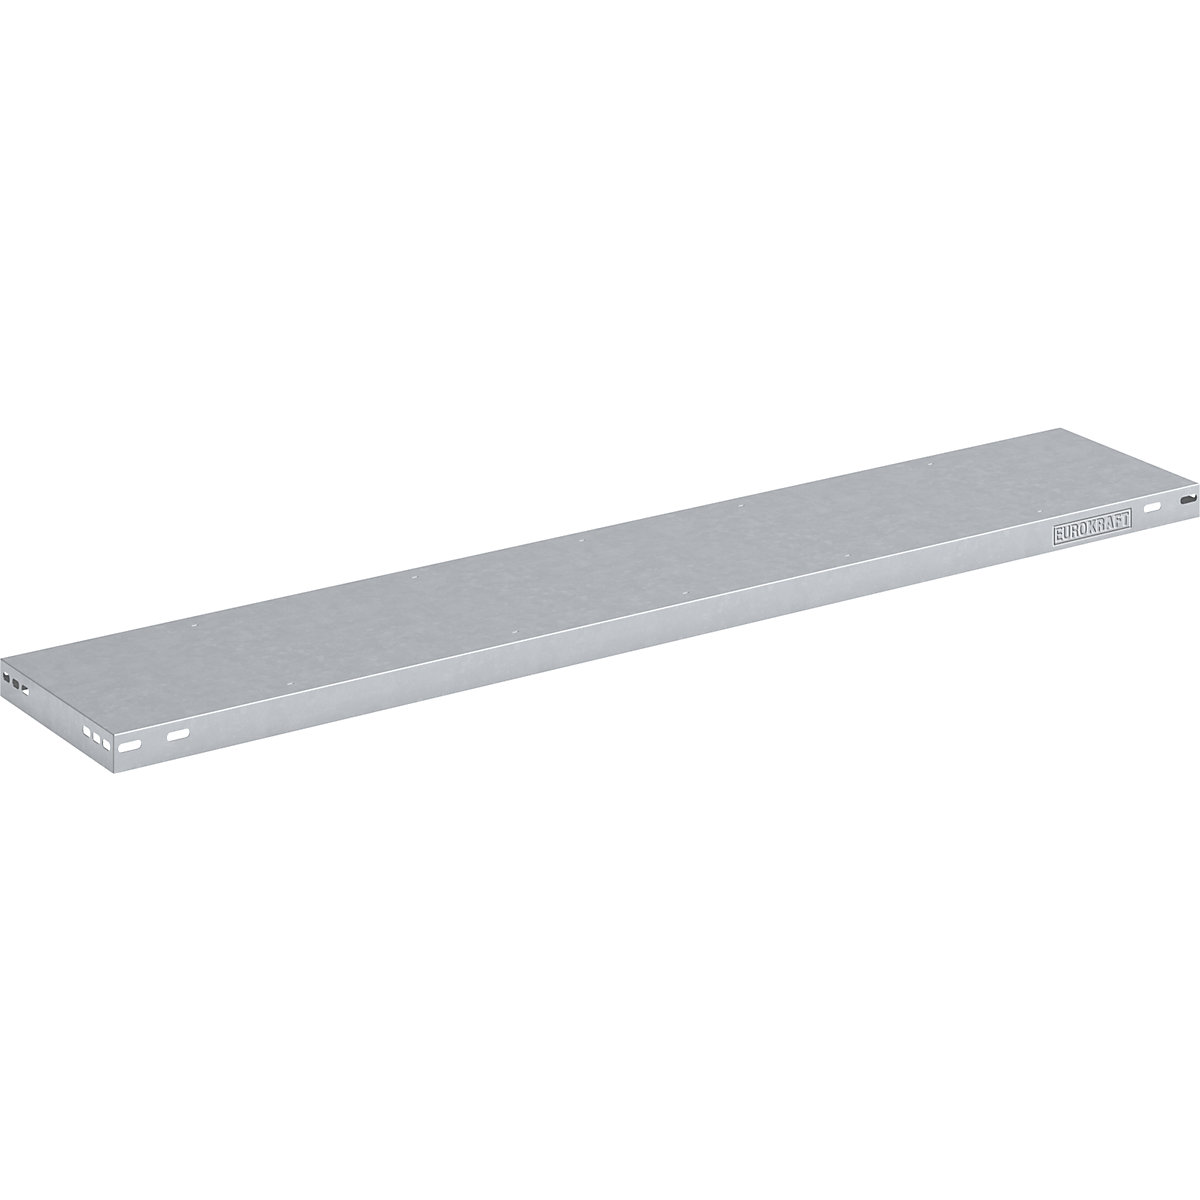 Additional shelf – hofe, WxD 1300 x 300 mm, max. shelf load 200 kg, zinc plated-2